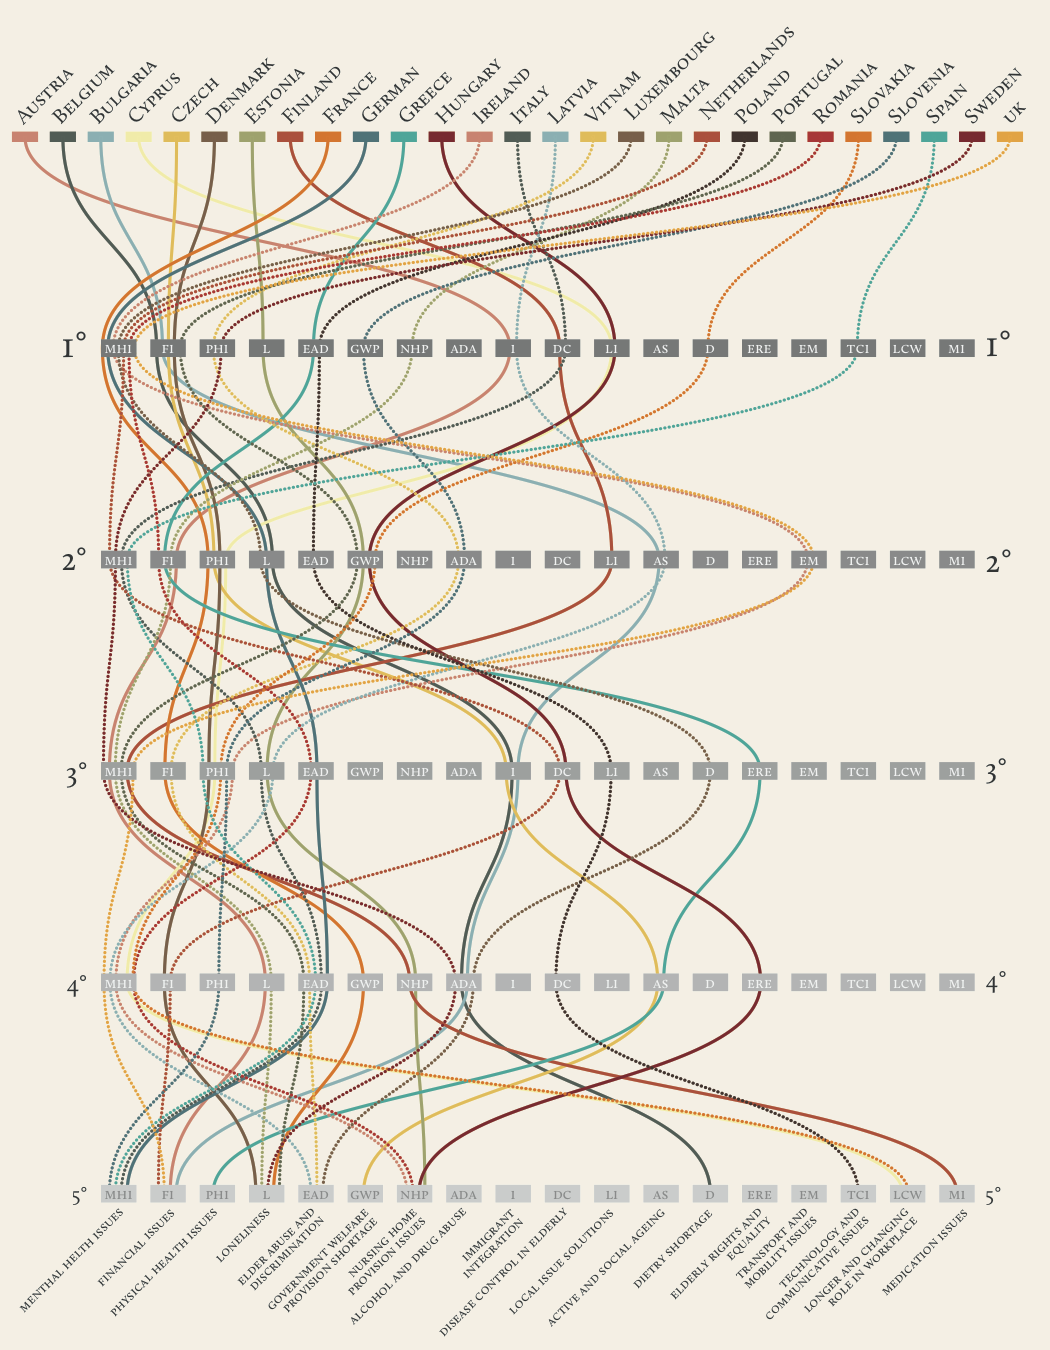 dataviz infovis bubbles network Treemap Food  emaps graph infographic visualization viz InfoViz sankey